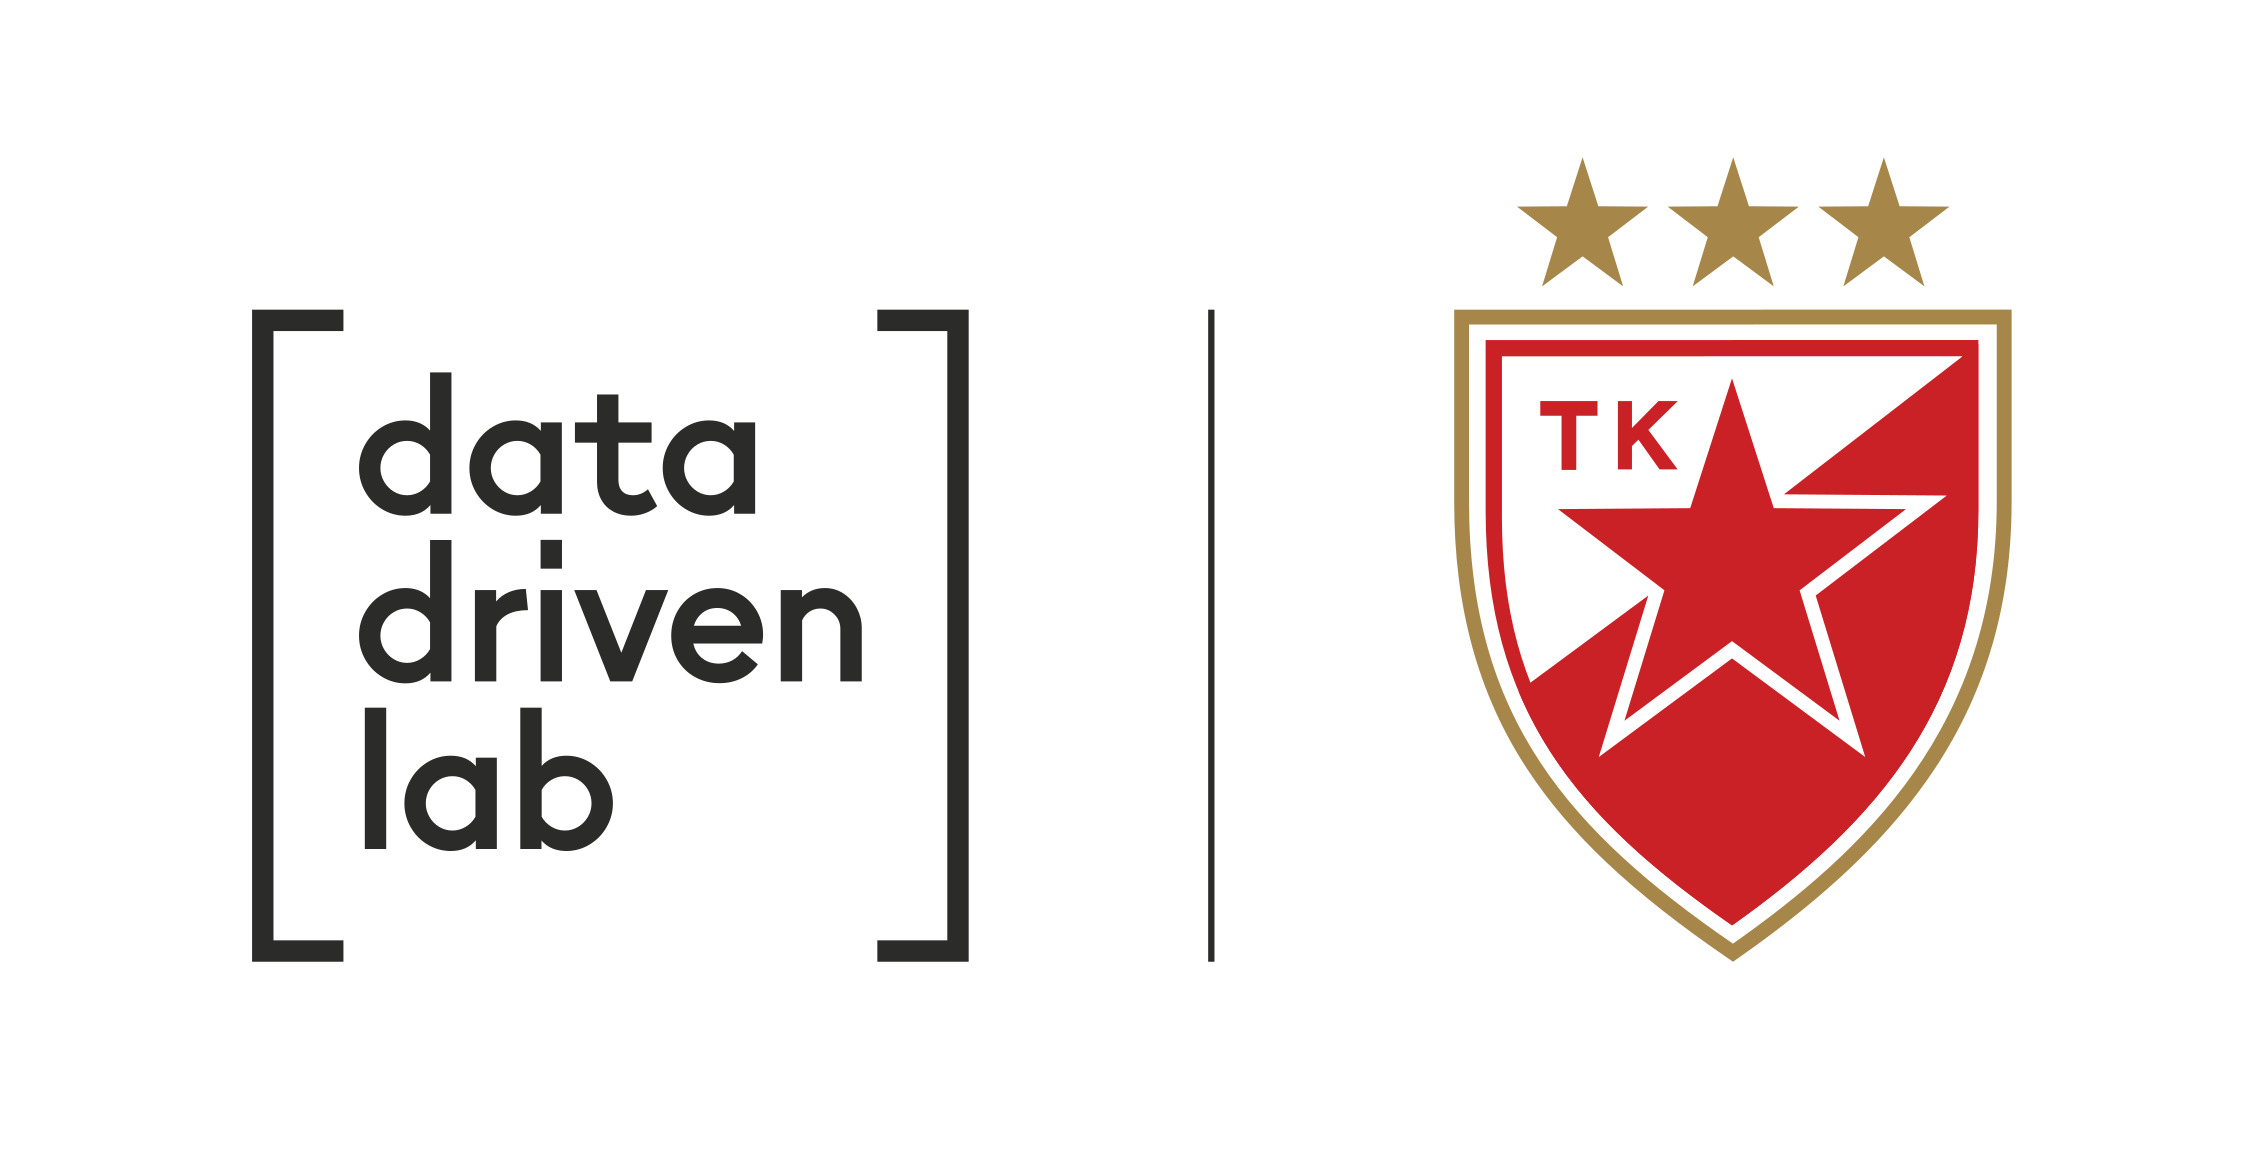 ddl-tk-joint-logo9469